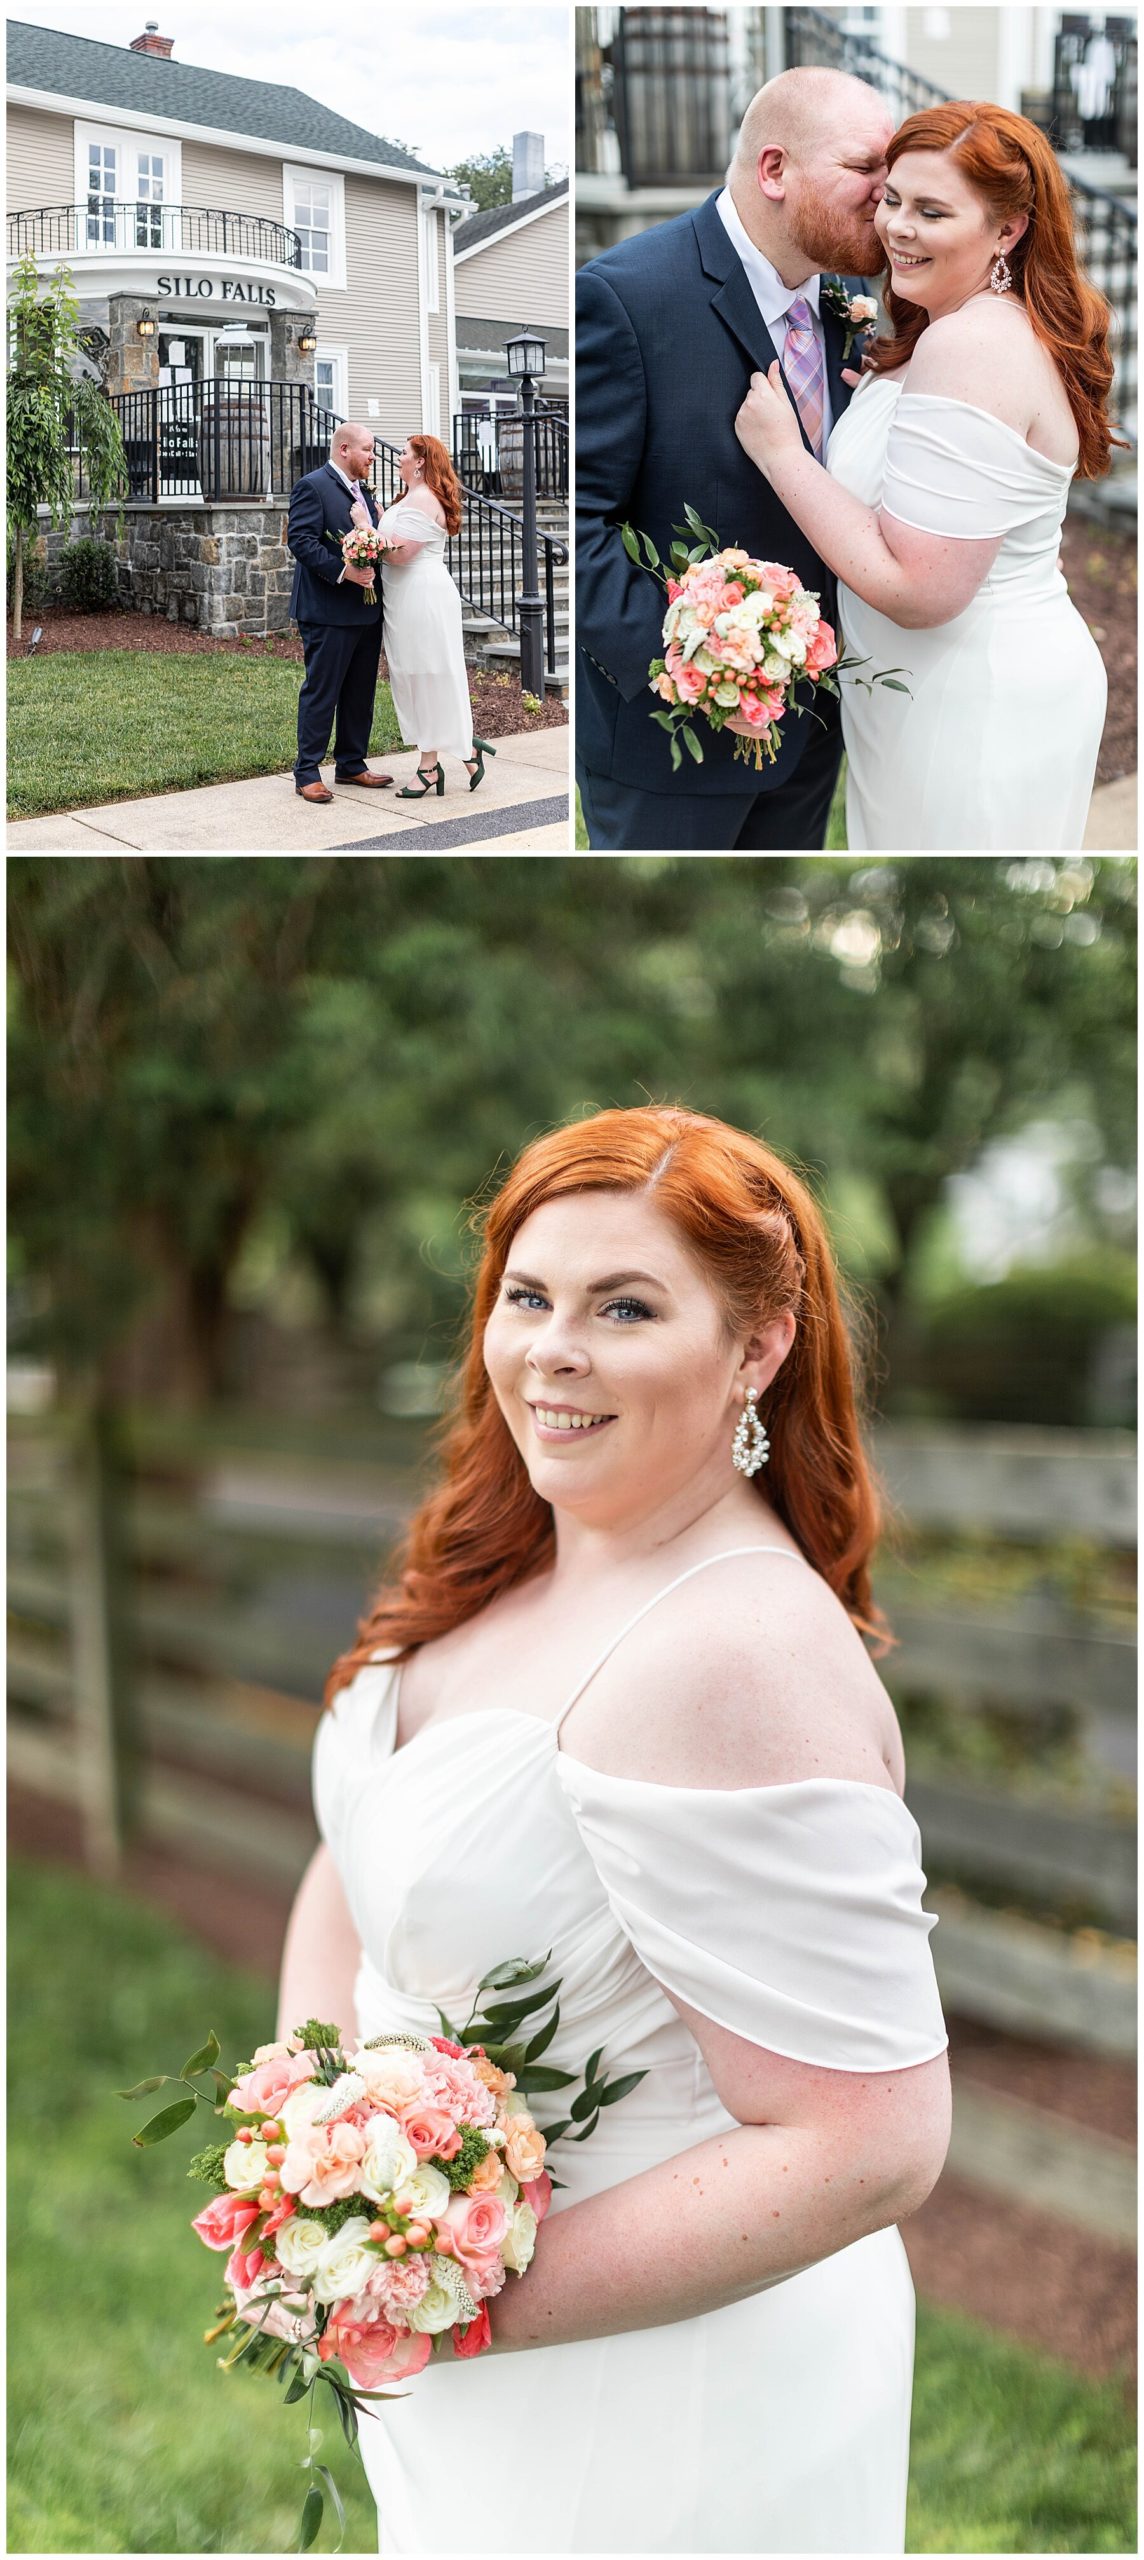 Hannah Mark Silo Falls Beloved Weddings Mini Wedding Living Radiant Photography - 2020-06-25_0047.jpg